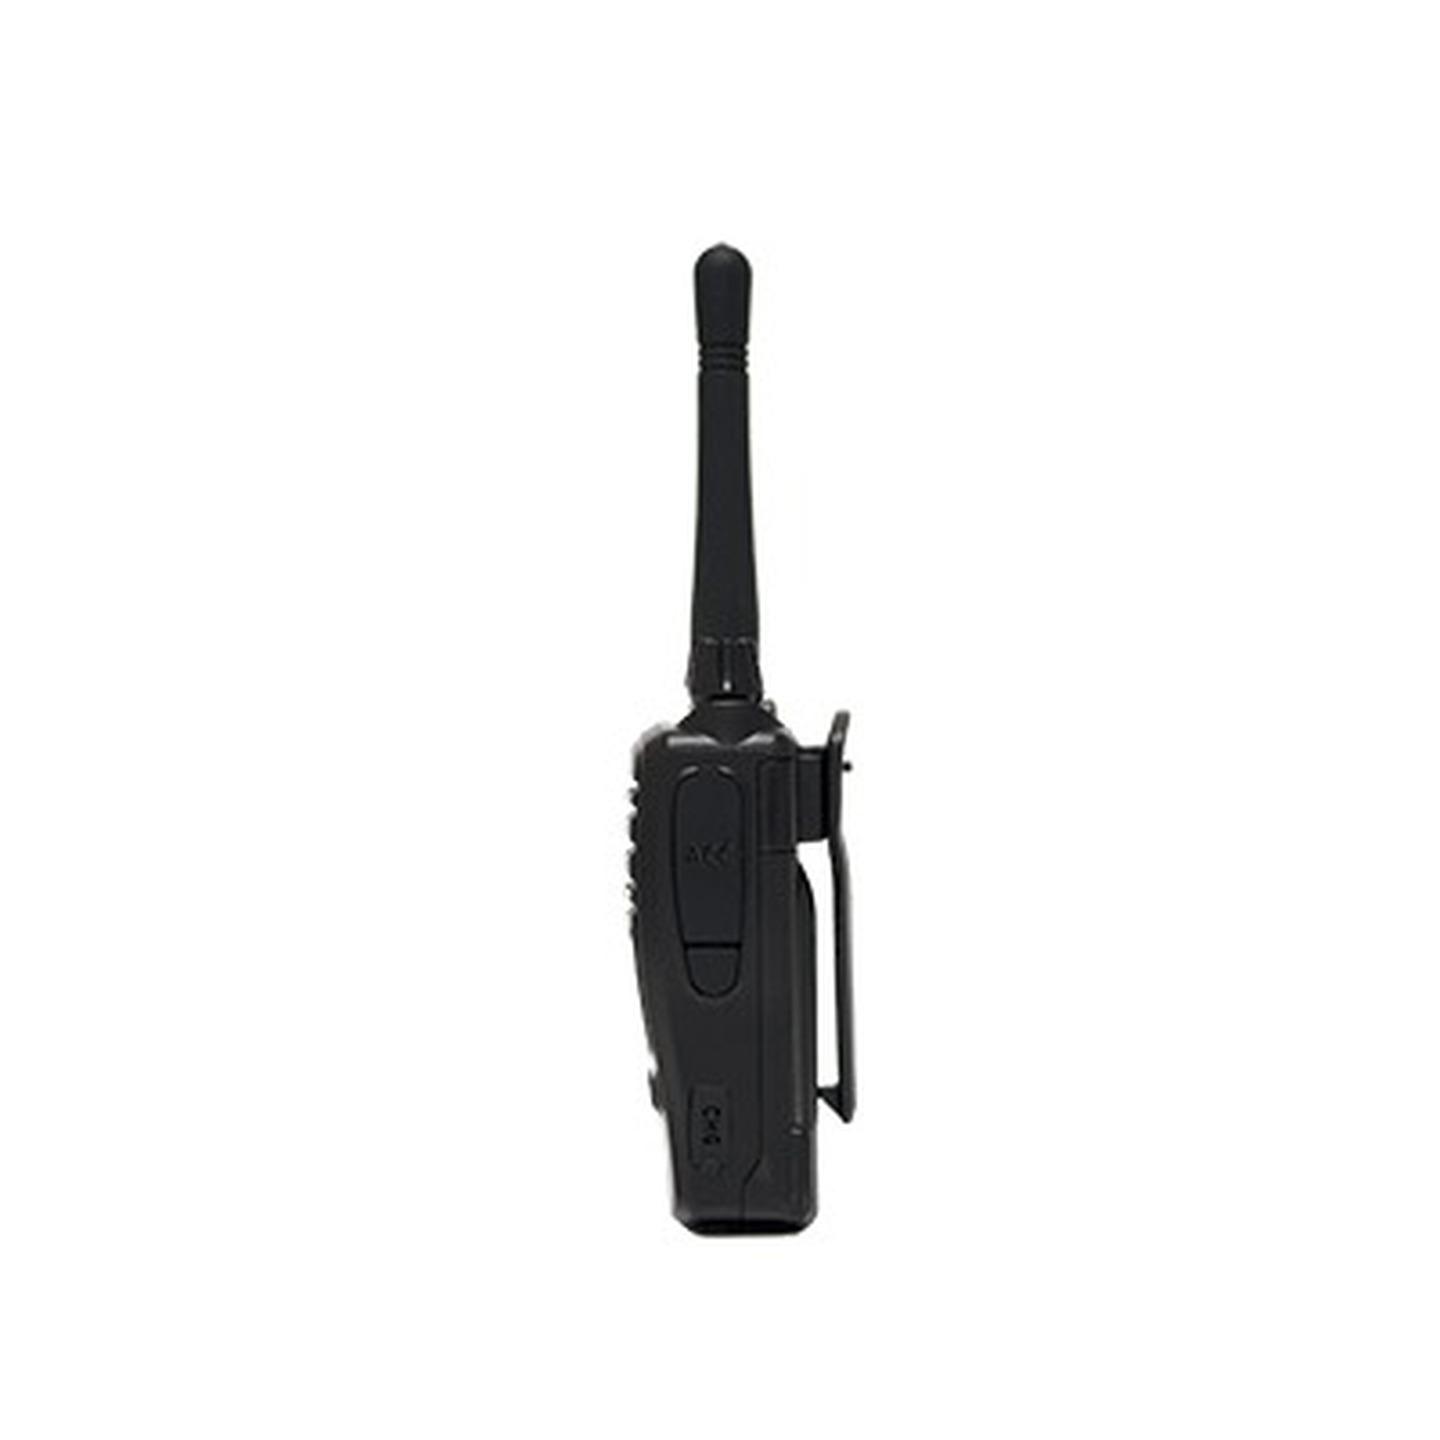 GME 2W UHF Transceiver TX677